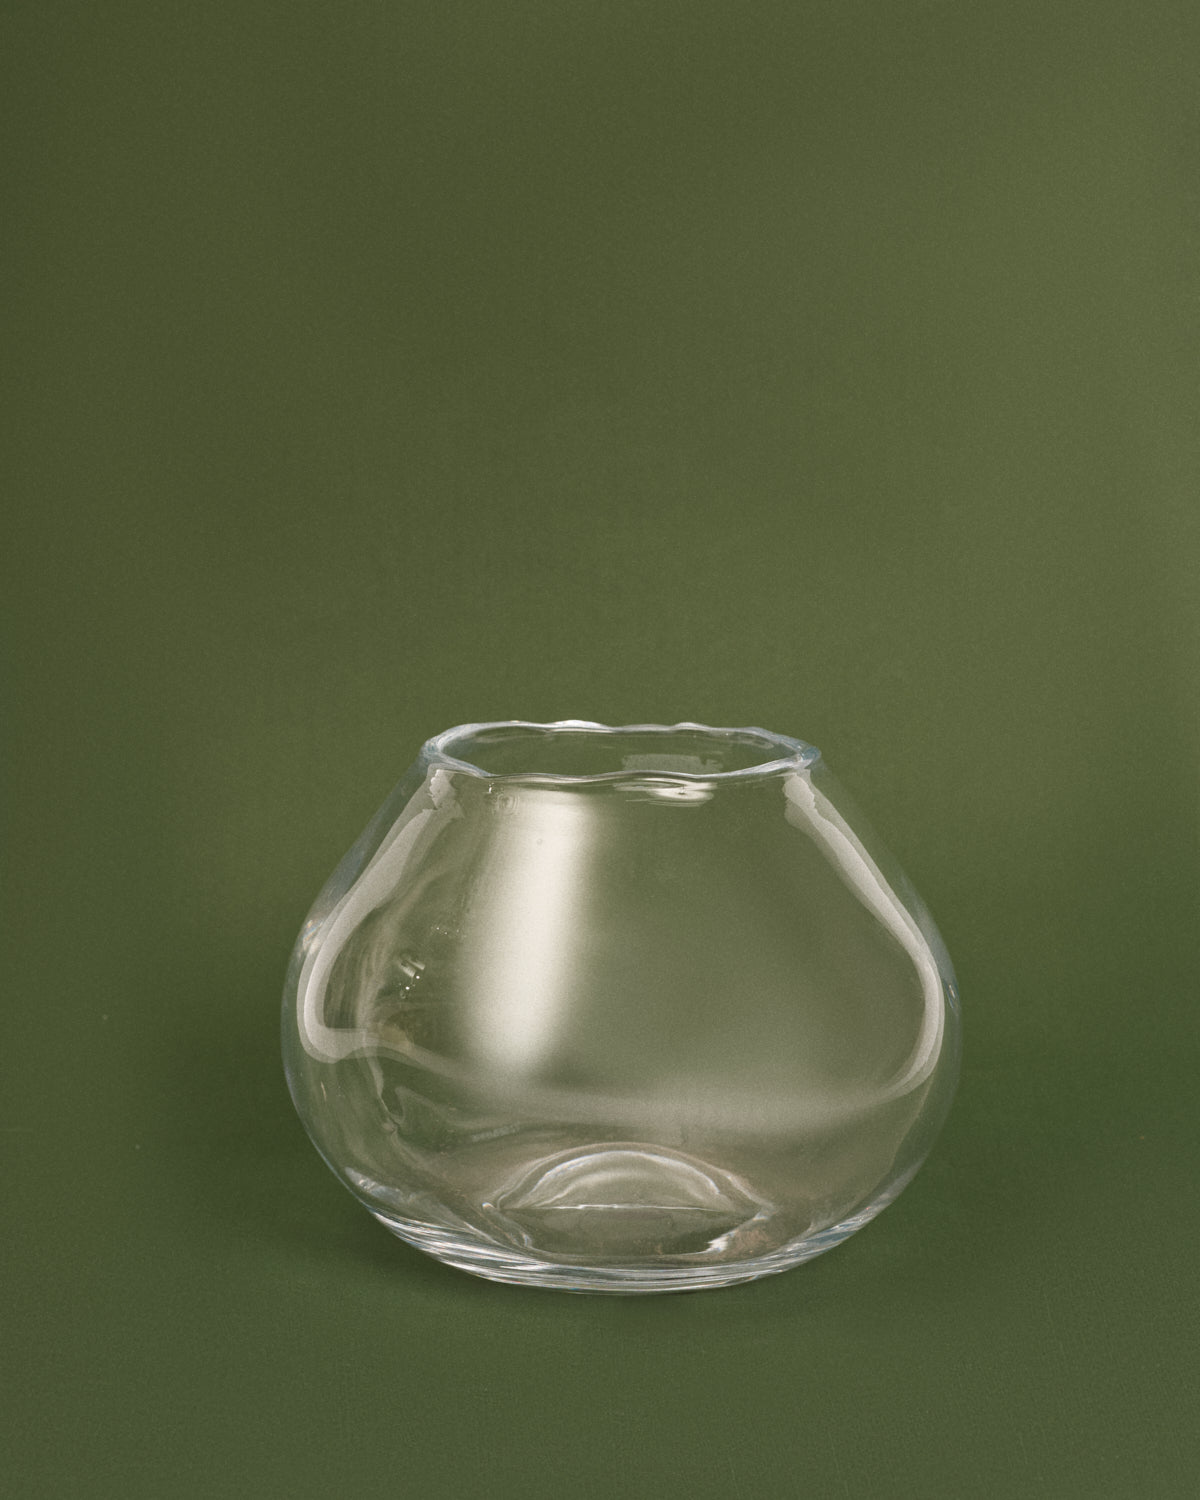 Uneven shaped glass vase